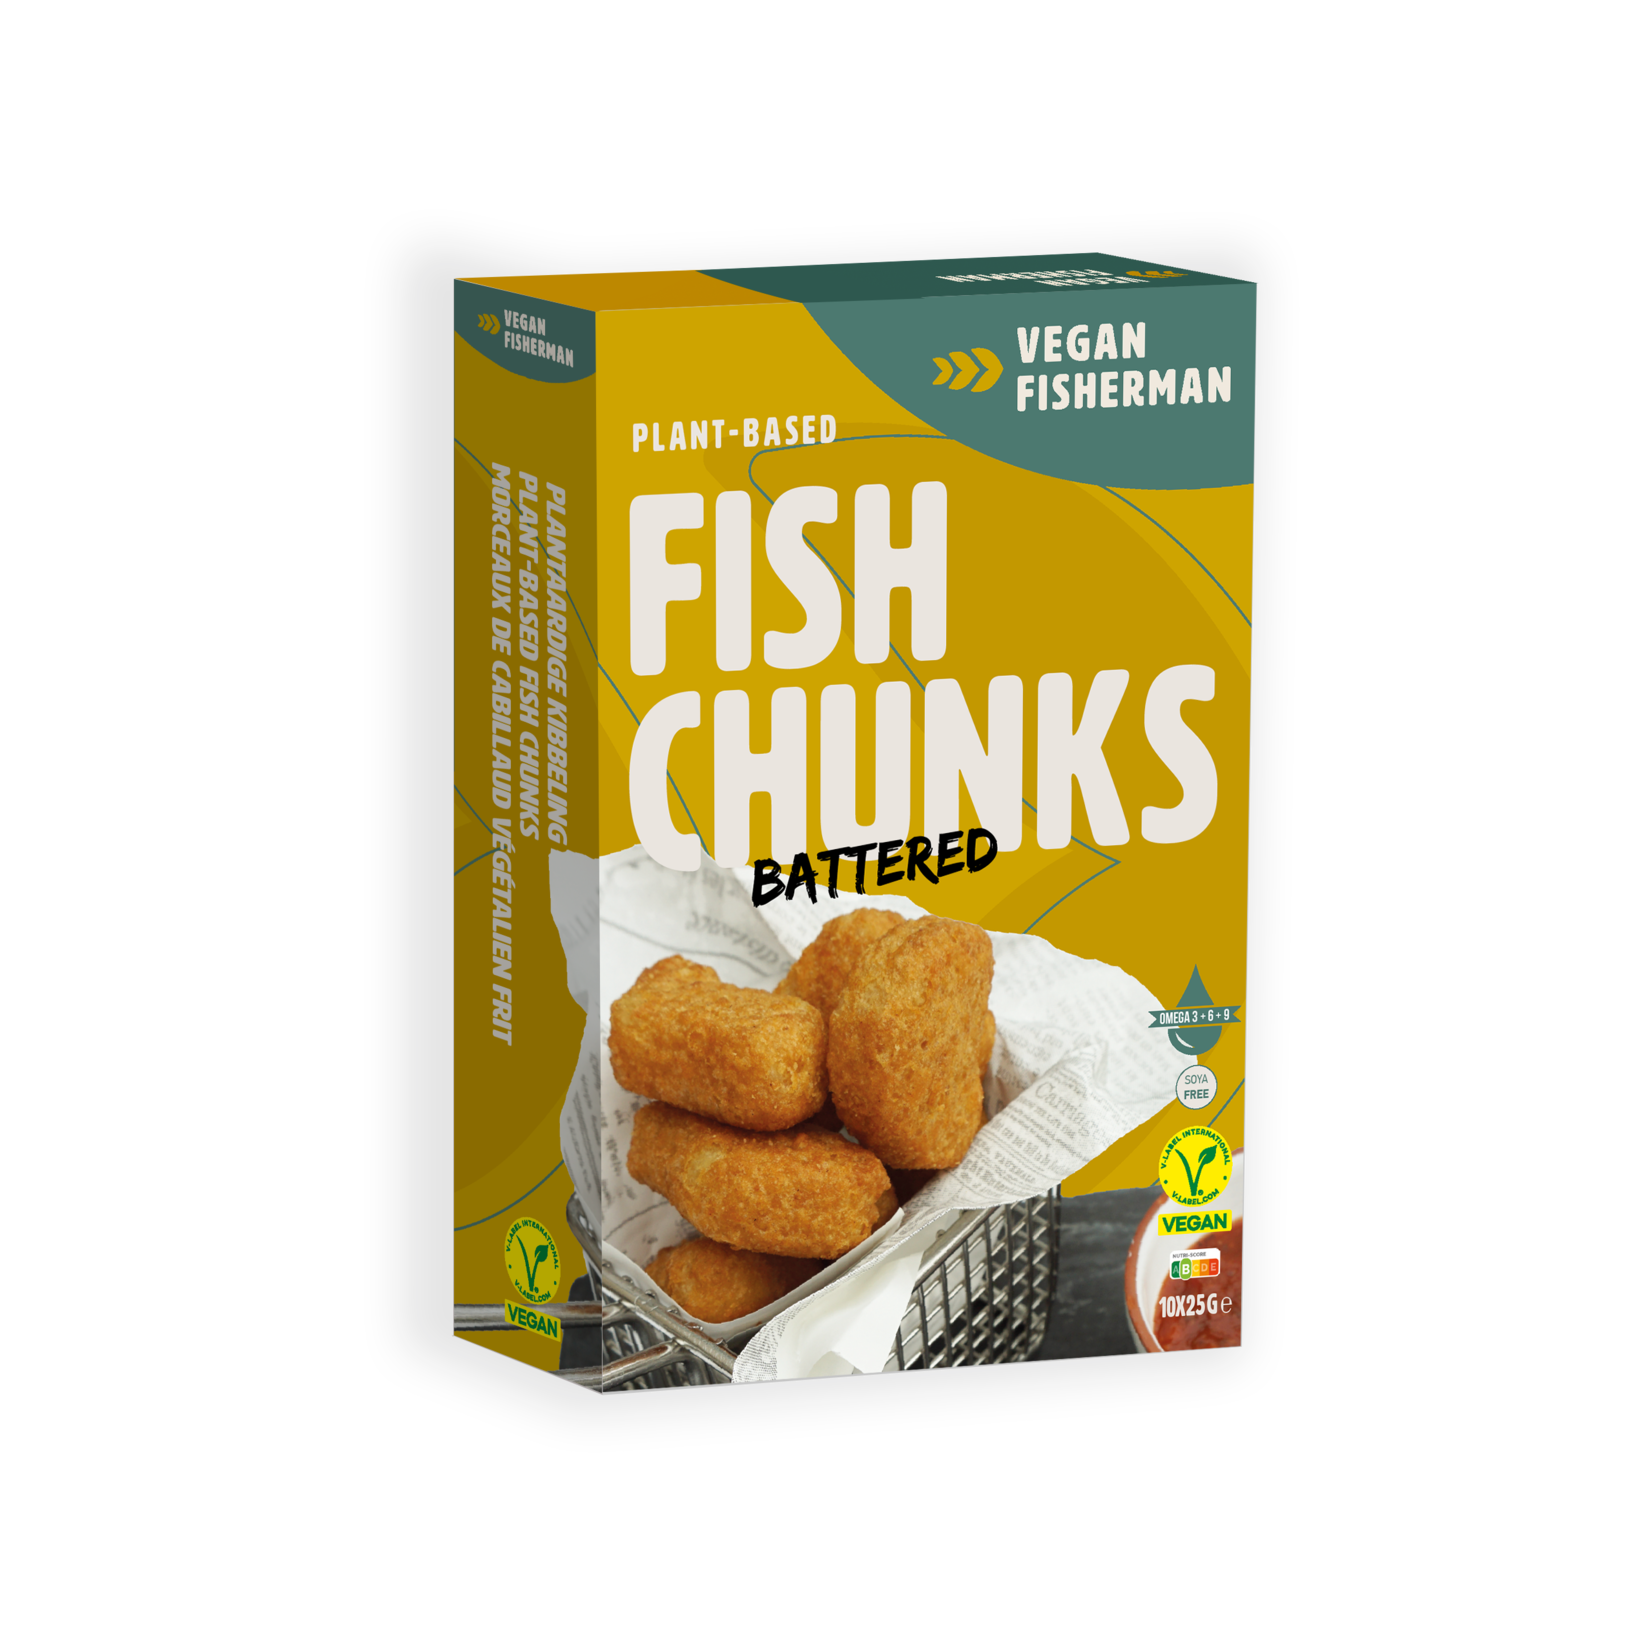 Vegan Visboer - Vegan Fisherman Vegan Fisherman Battered Fish Chunks | Plant-based snacks & products